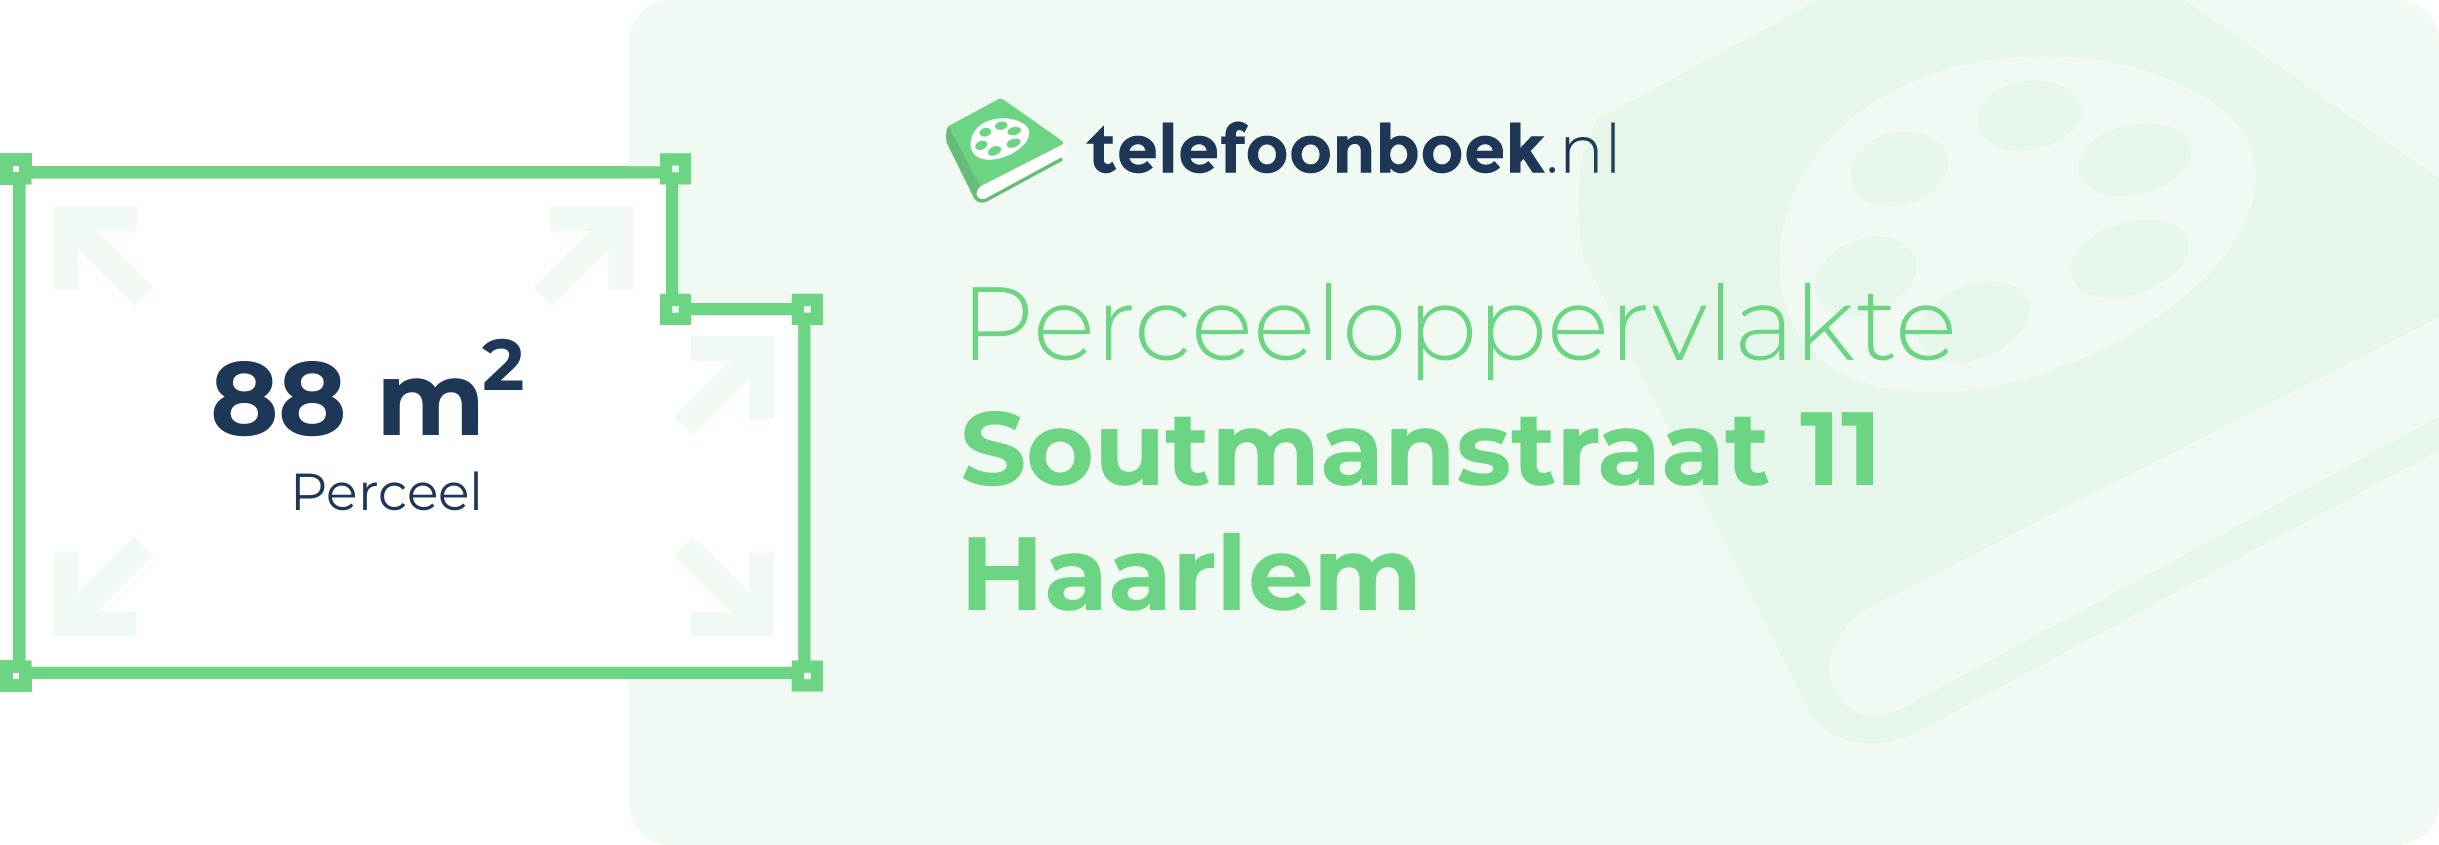 Perceeloppervlakte Soutmanstraat 11 Haarlem